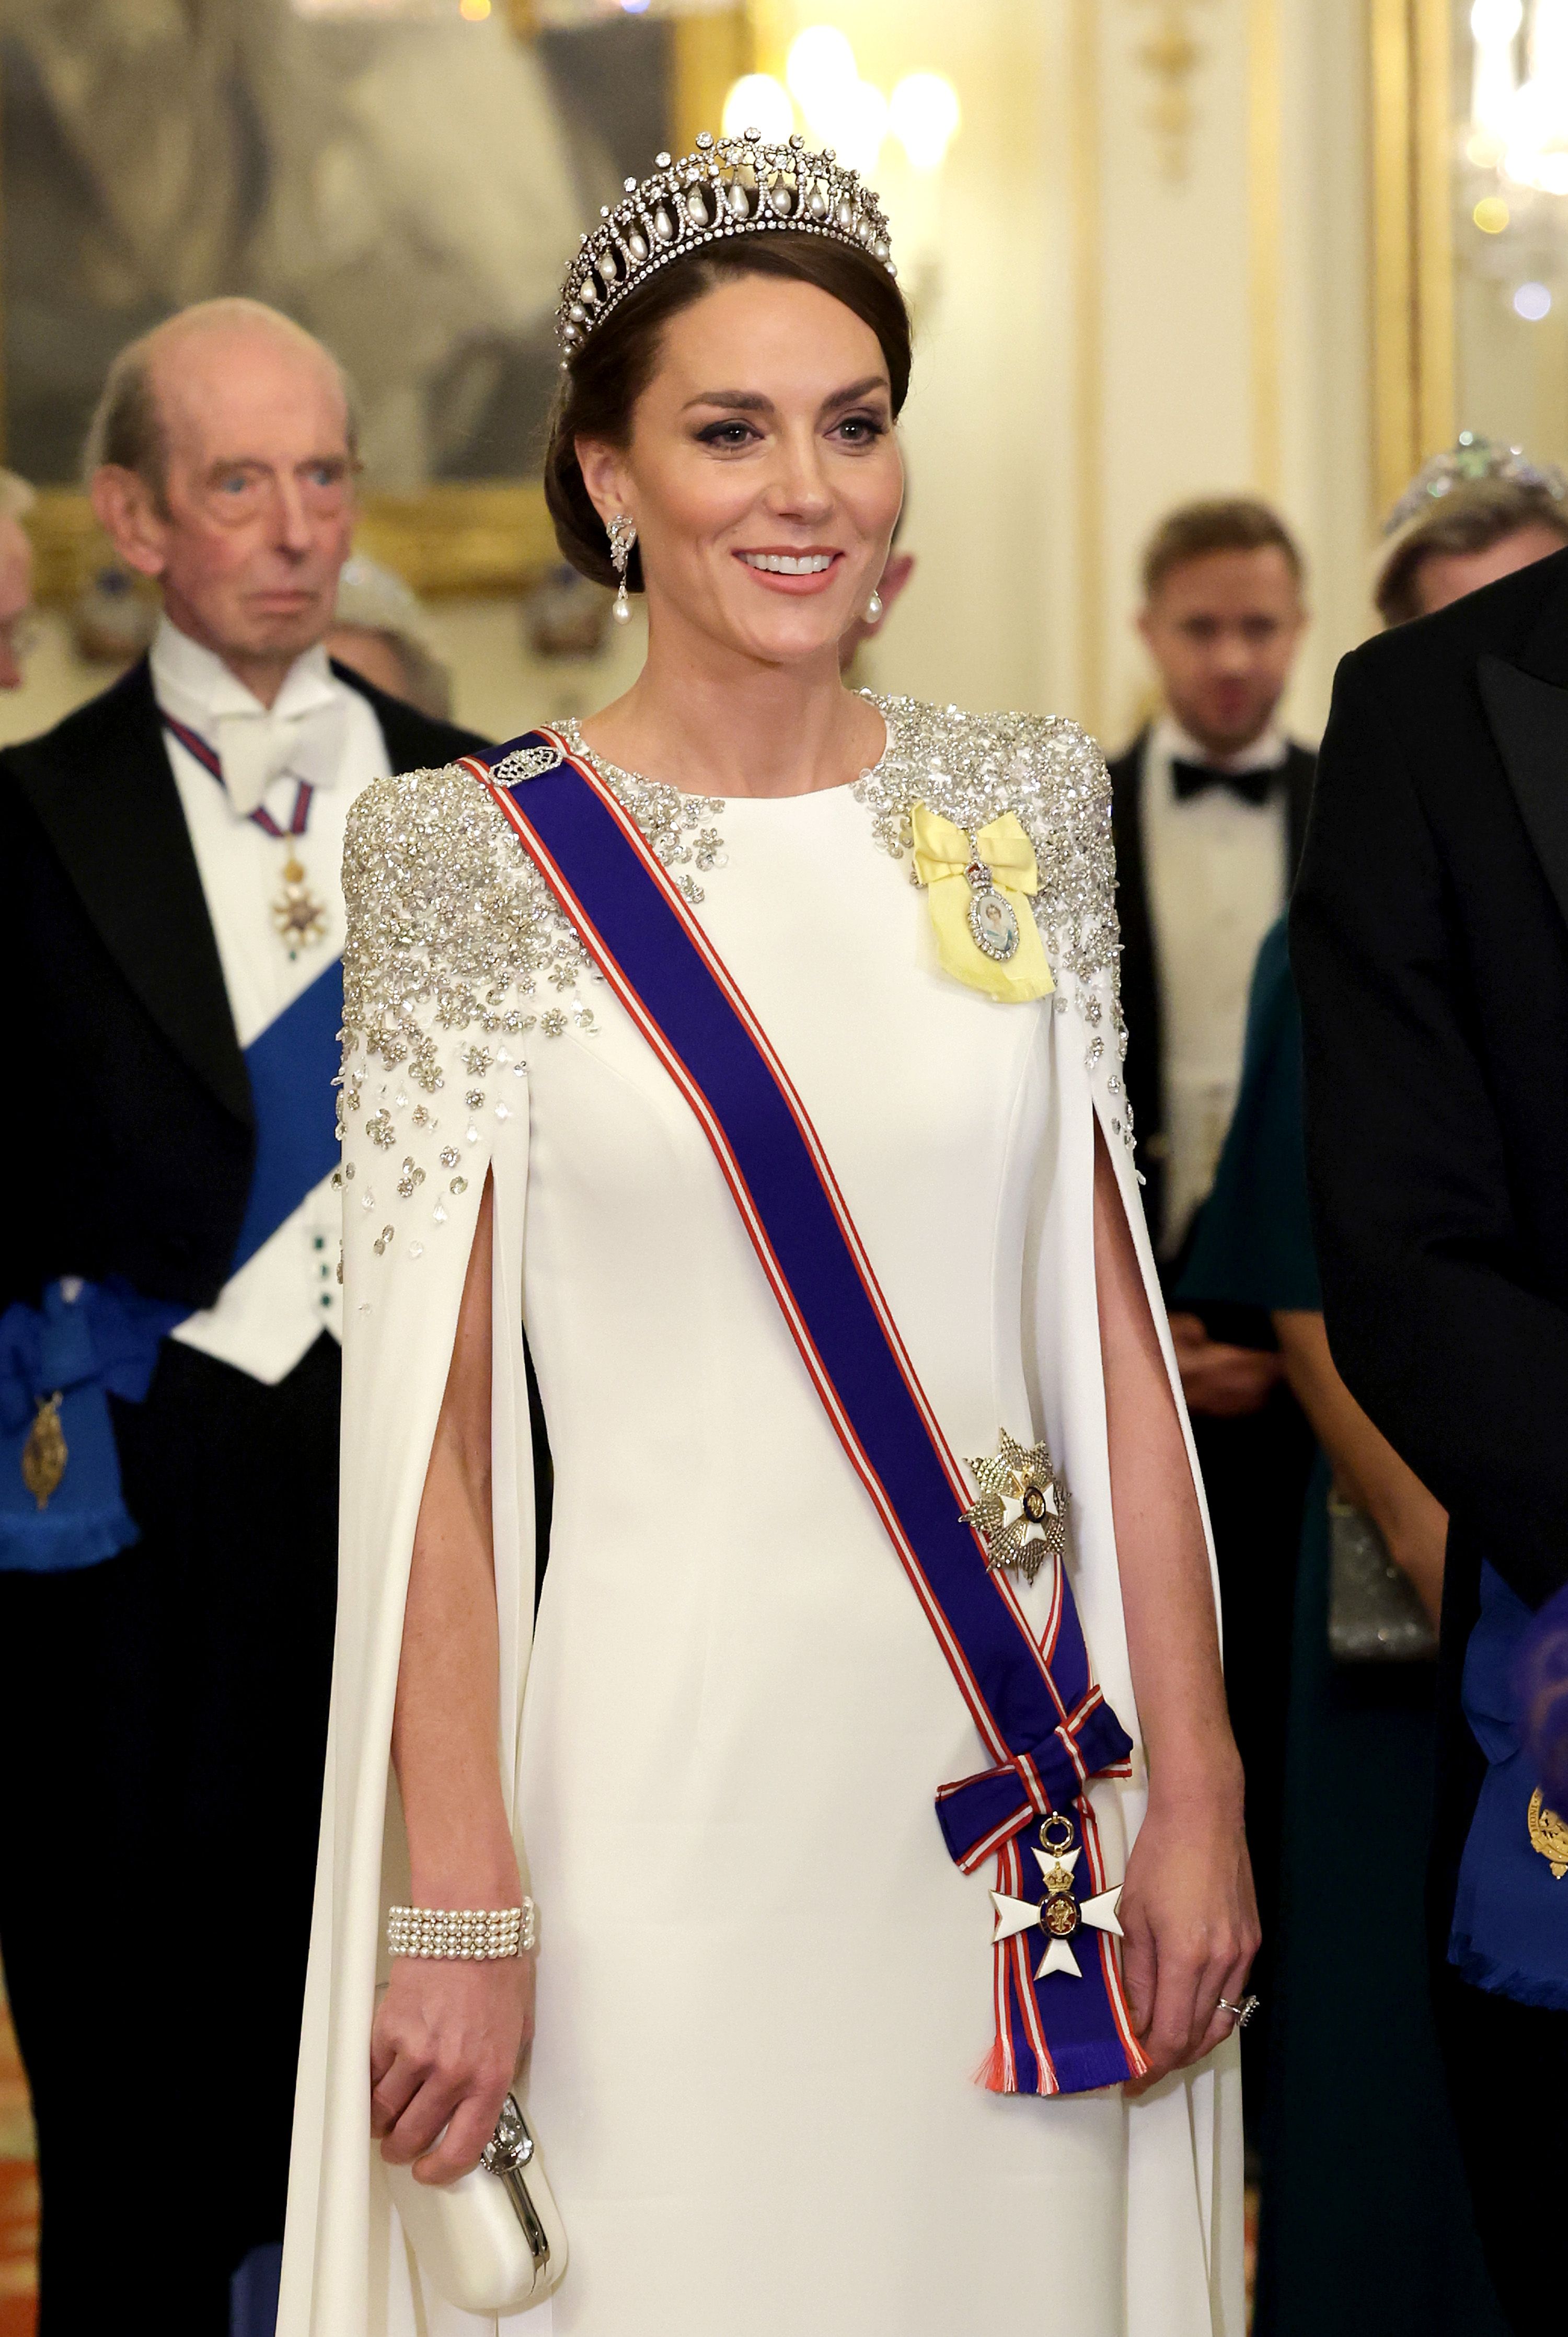 What Tiara Will Kate Middleton Wear to King Charles's Coronation?